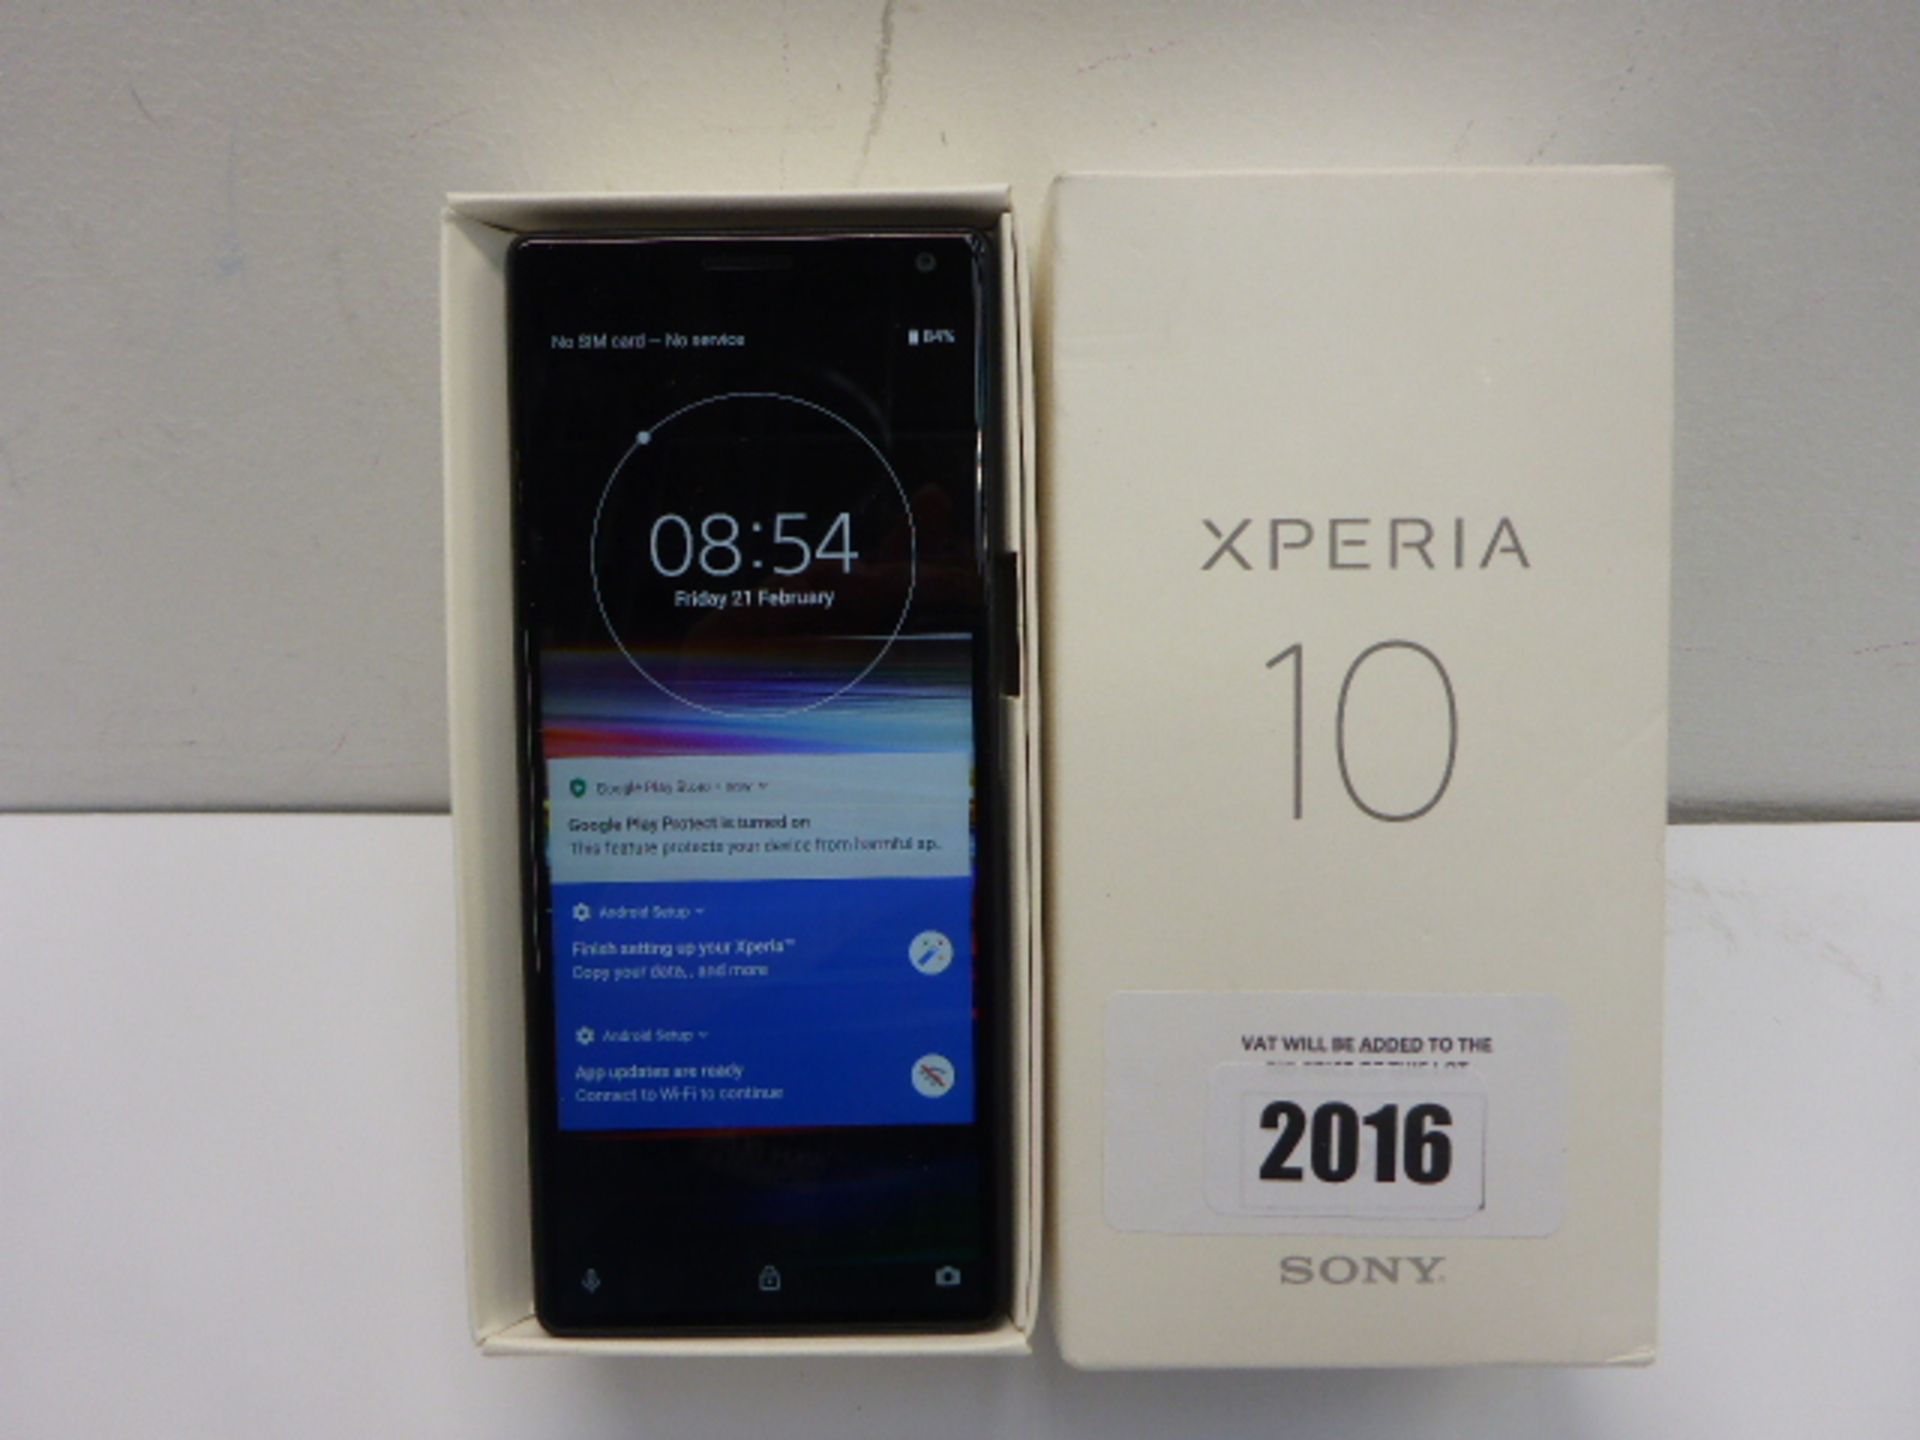 Sony Xperia 10 64GB smartphone